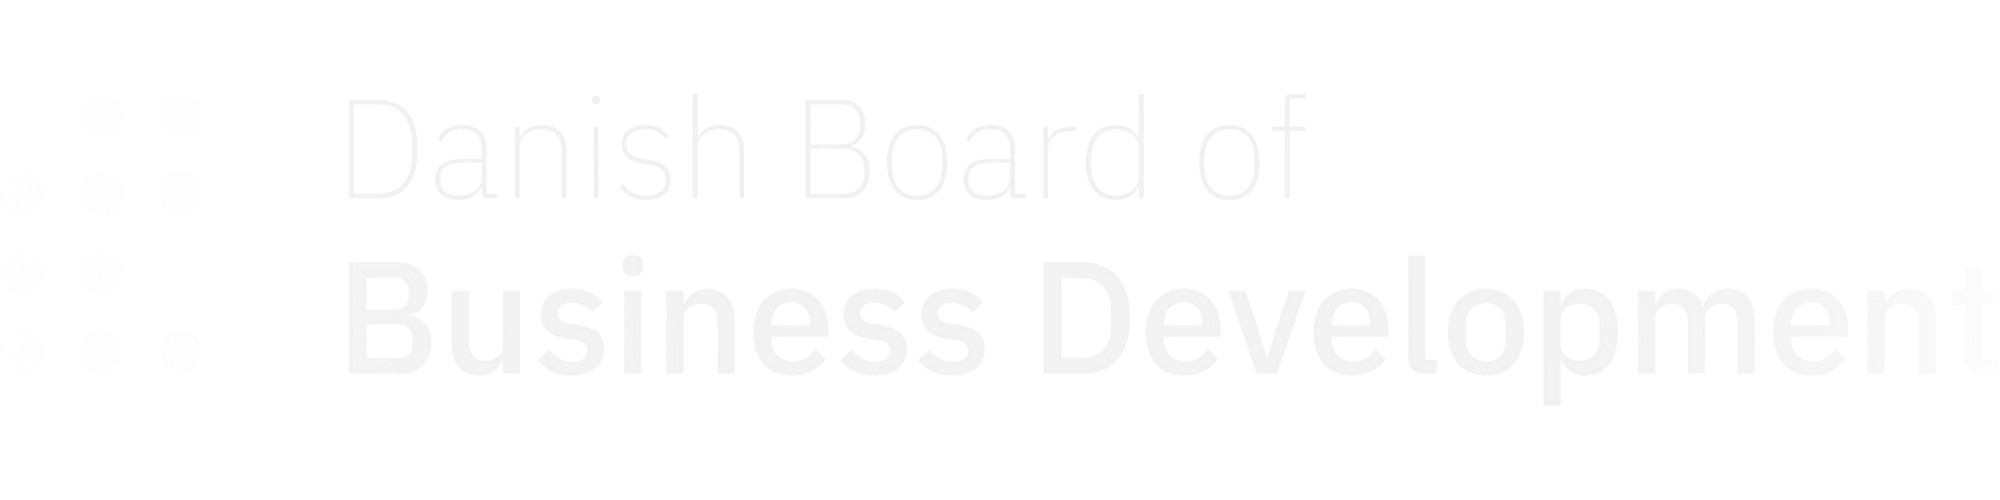 danish-board-of-business-development